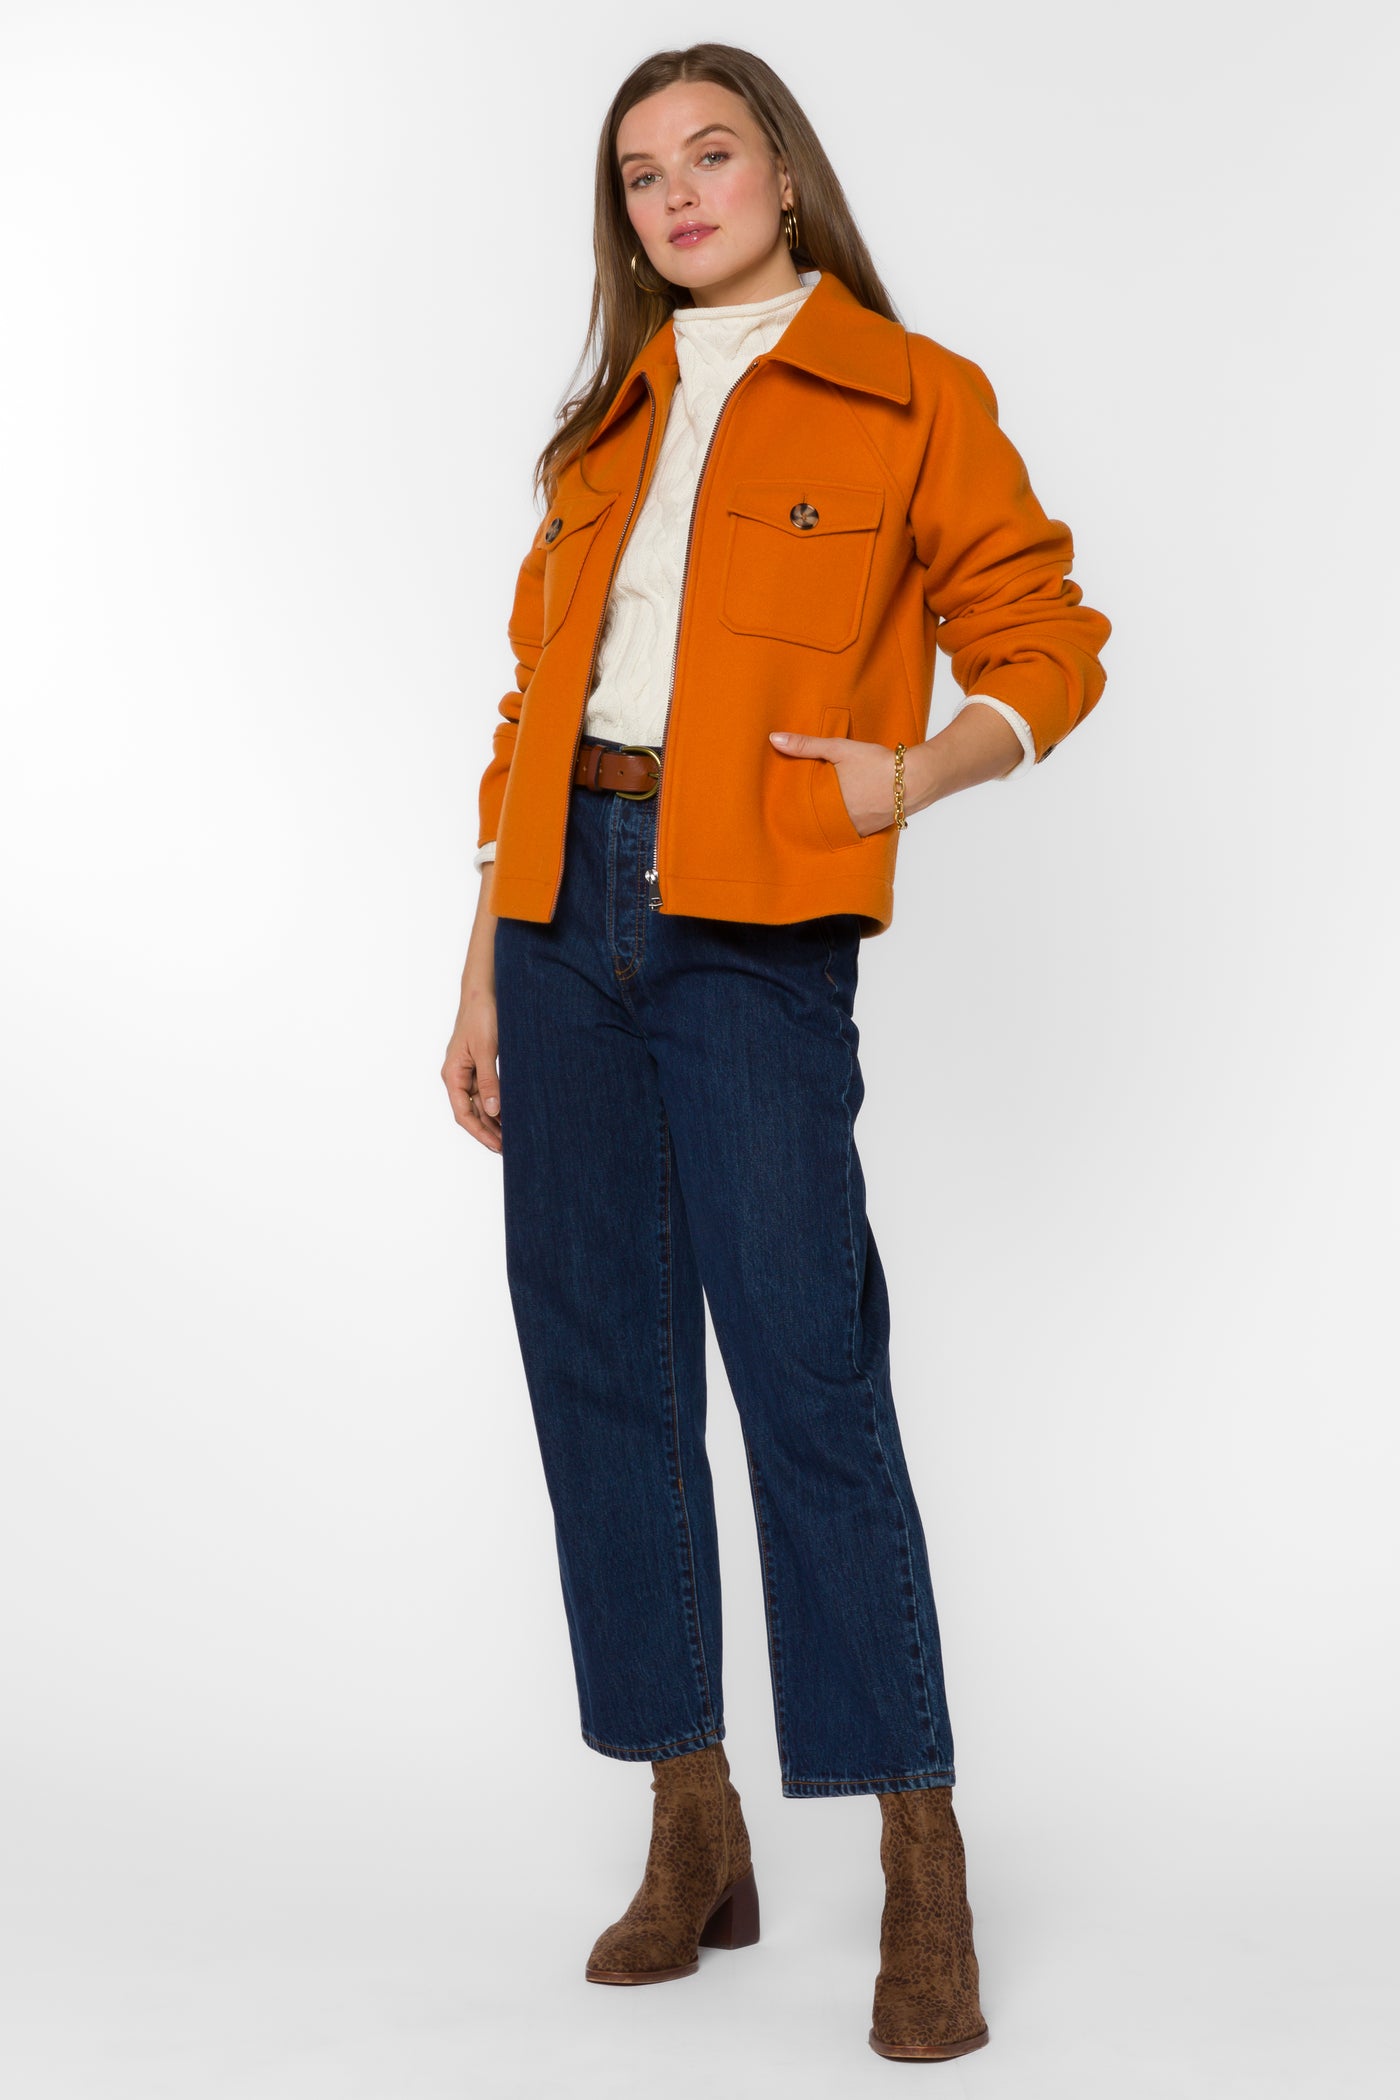 Stassi Pumpkin Jacket - Jackets & Outerwear - Velvet Heart Clothing